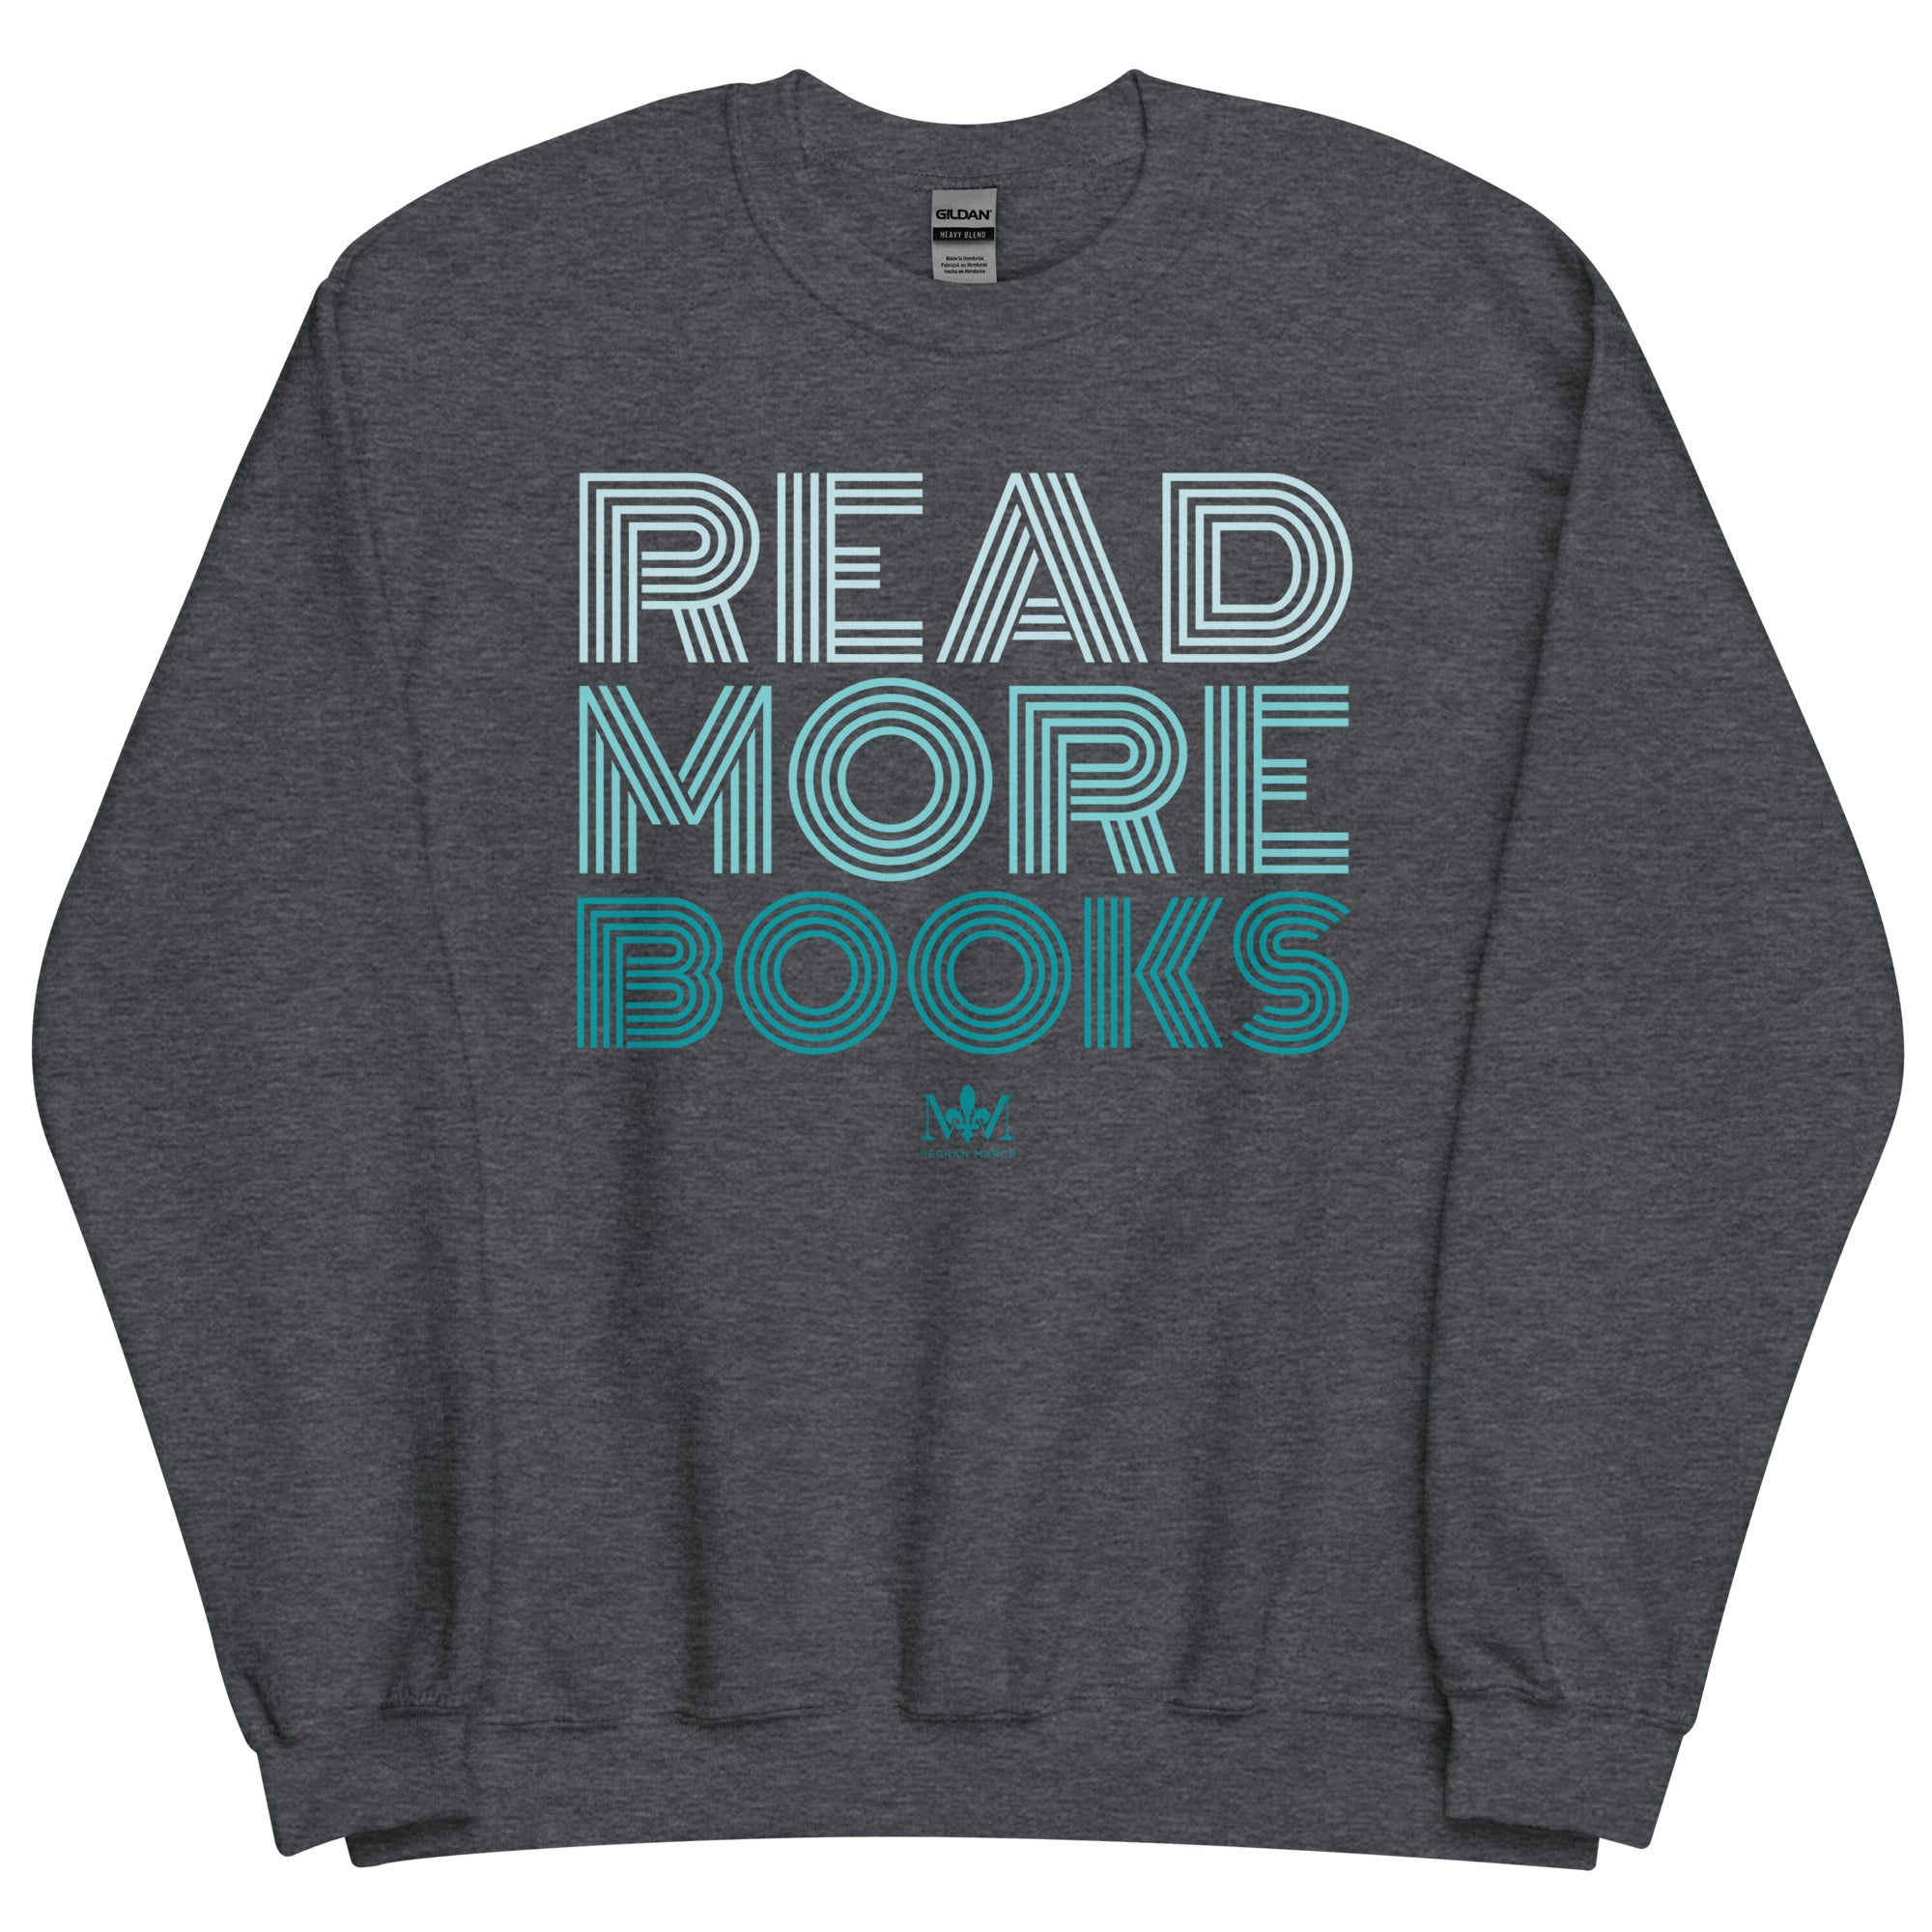 Read More Books Teal Graphic Sweatshirt